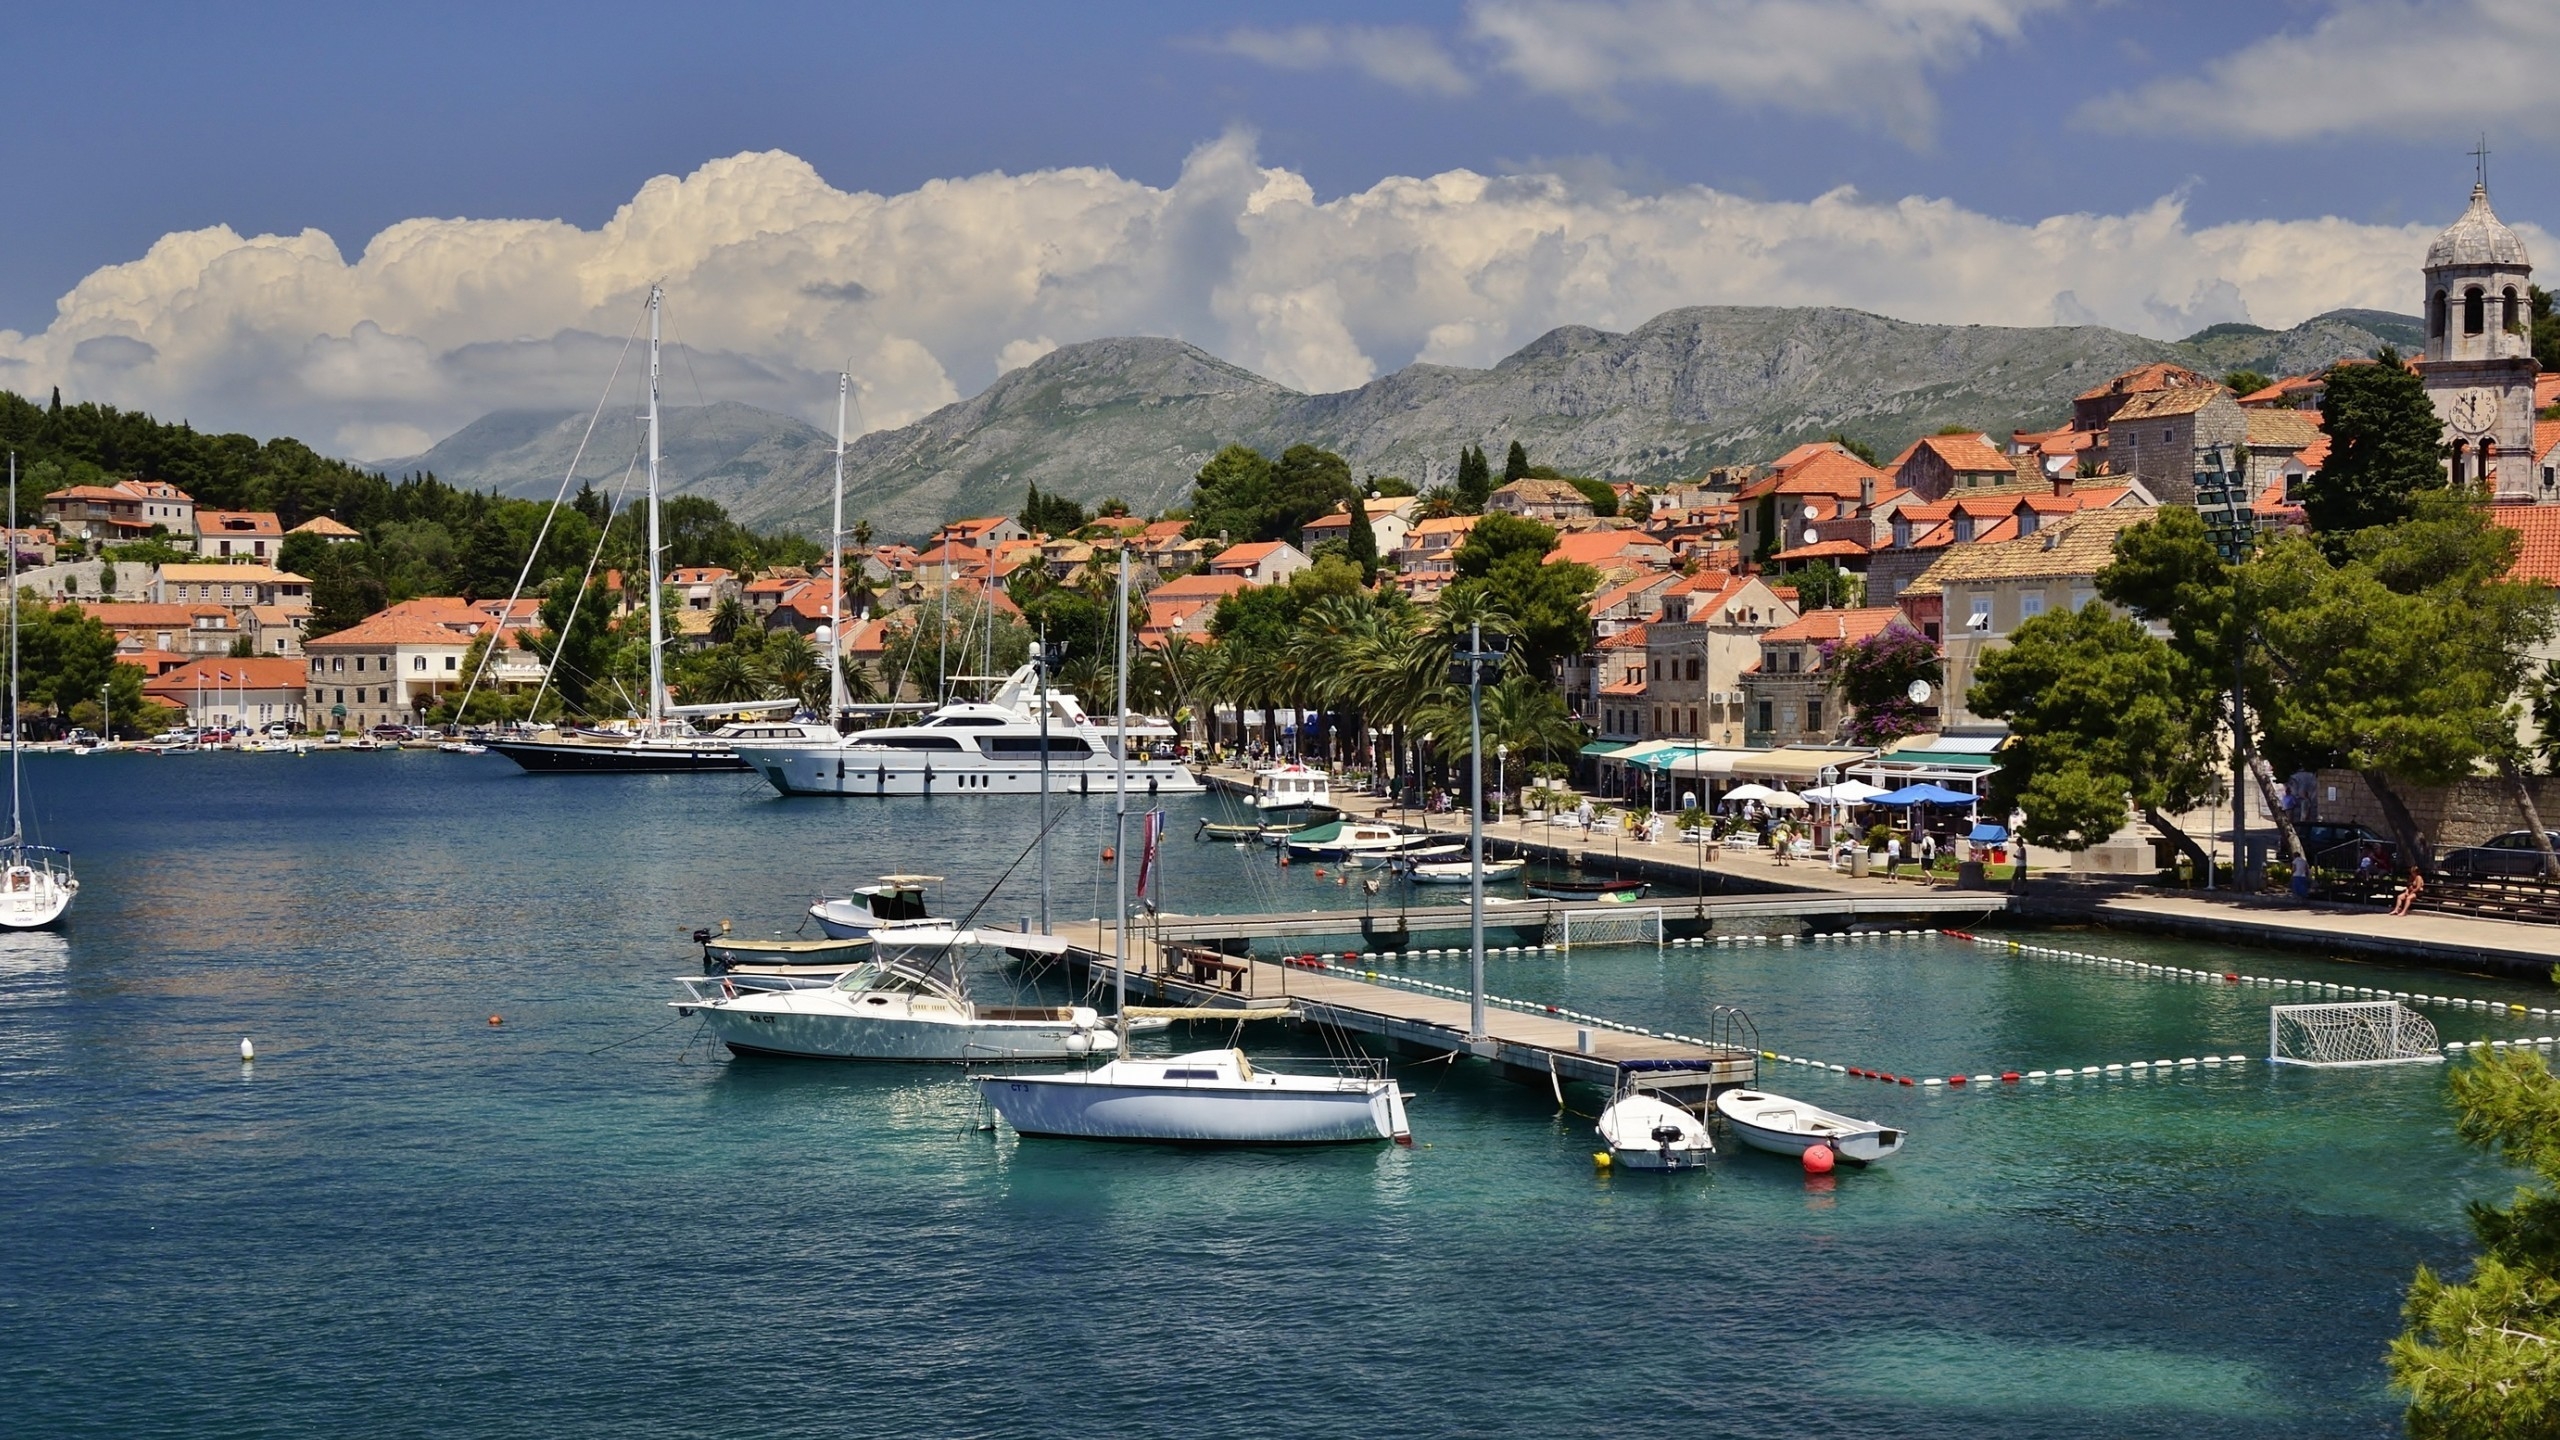 Croatia Port View for 2560x1440 HDTV resolution